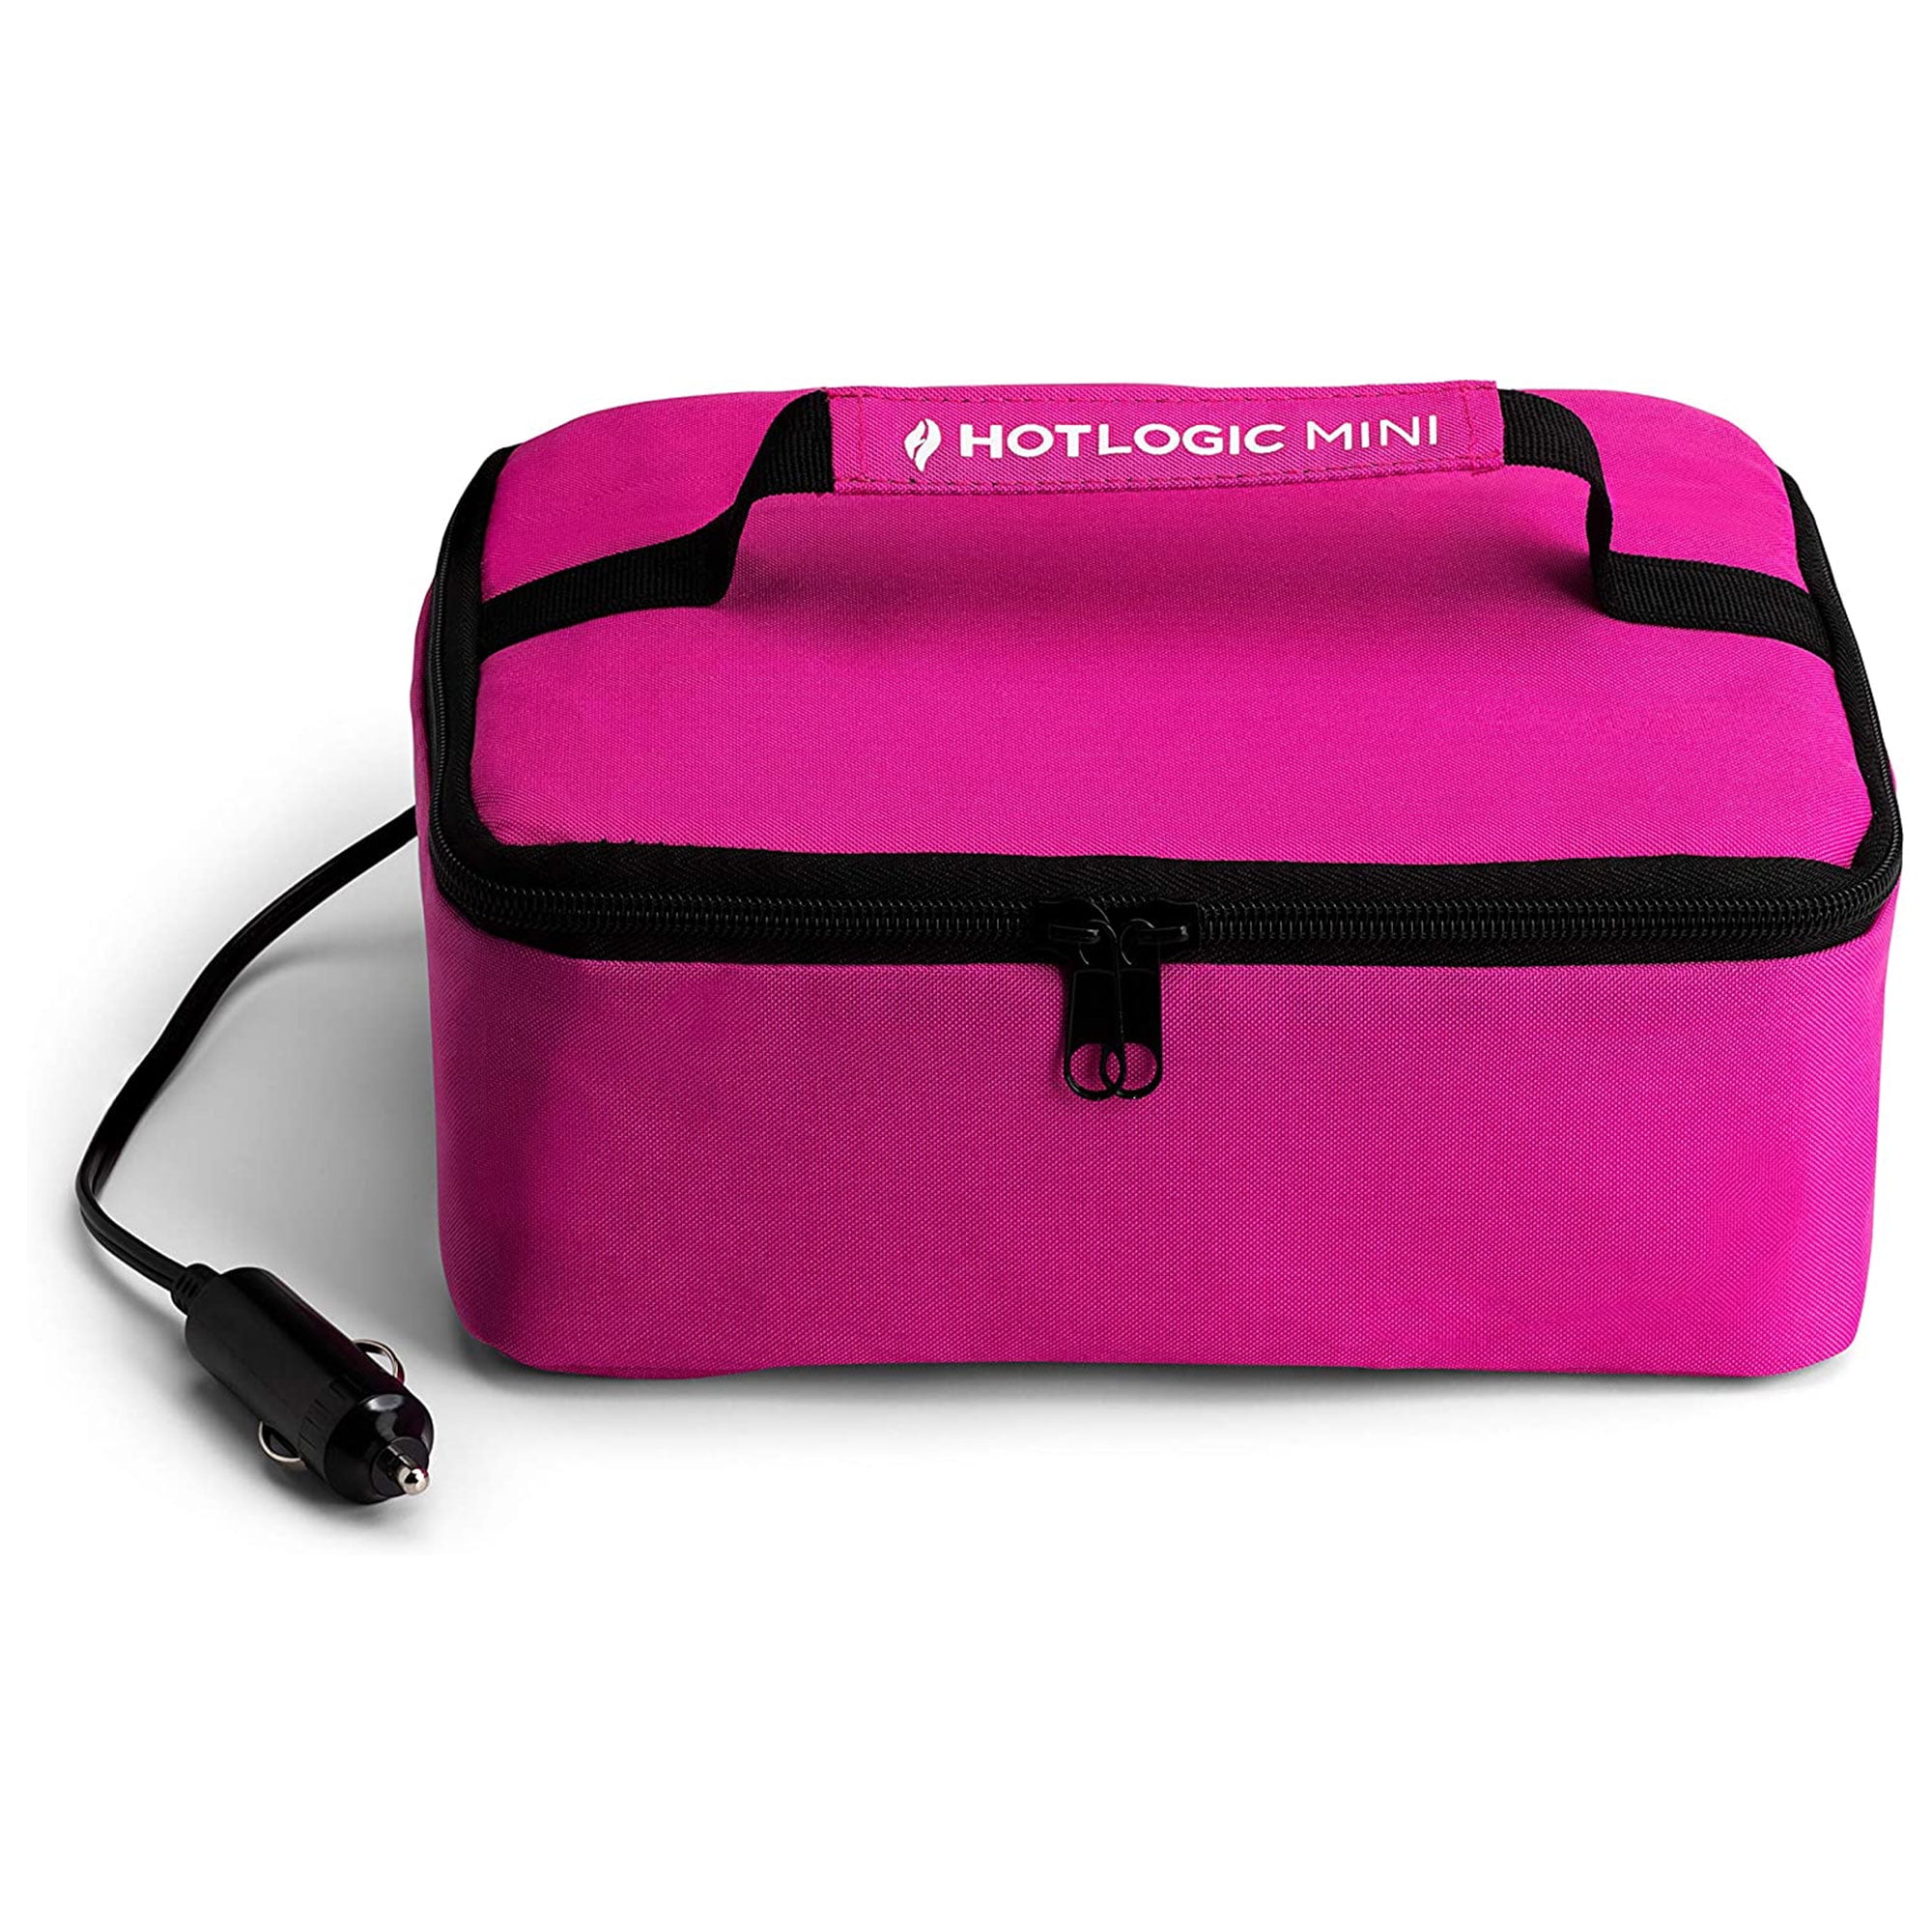 Hotlogic Food Warming Tote, Lunch Bag Plus 12V, Pink